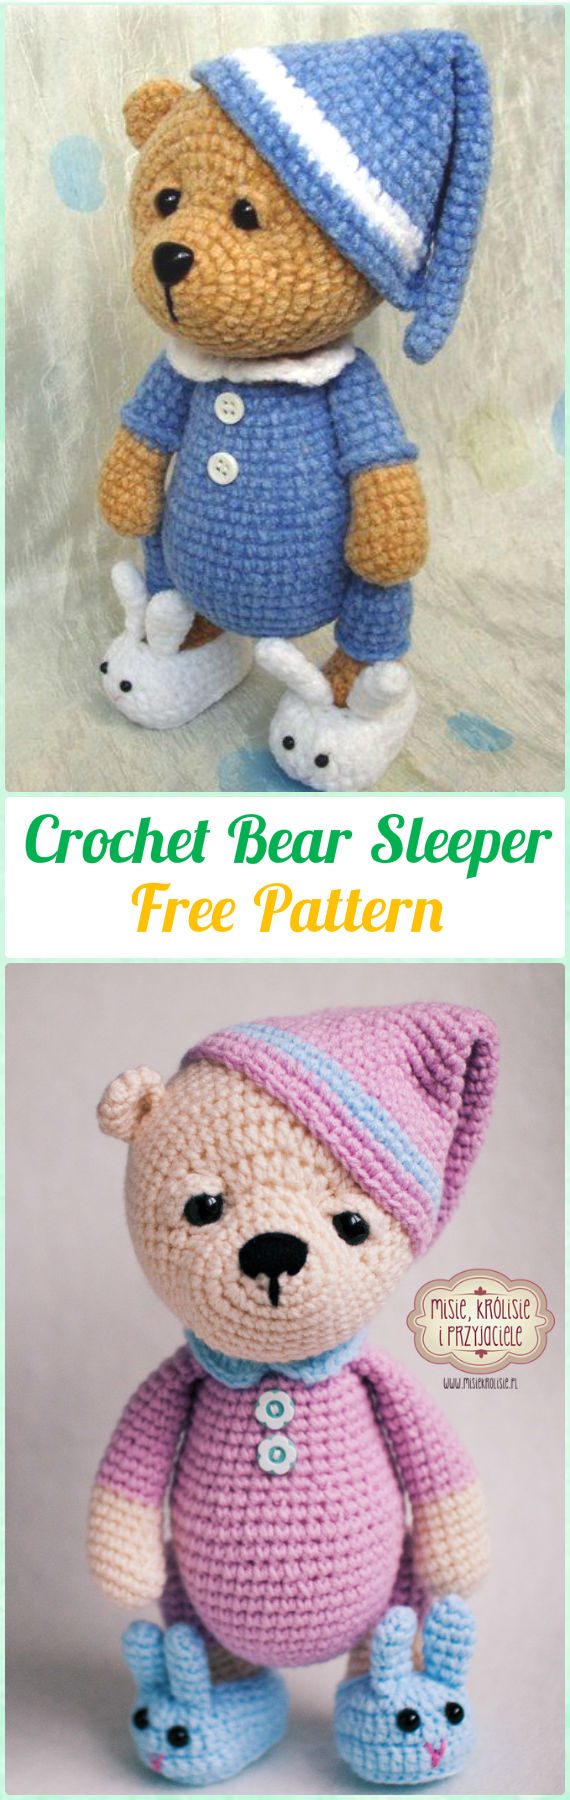 Amigurumi Bear Crochet Pattern Amigurumi Crochet Teddy Bear Toys Free Patterns